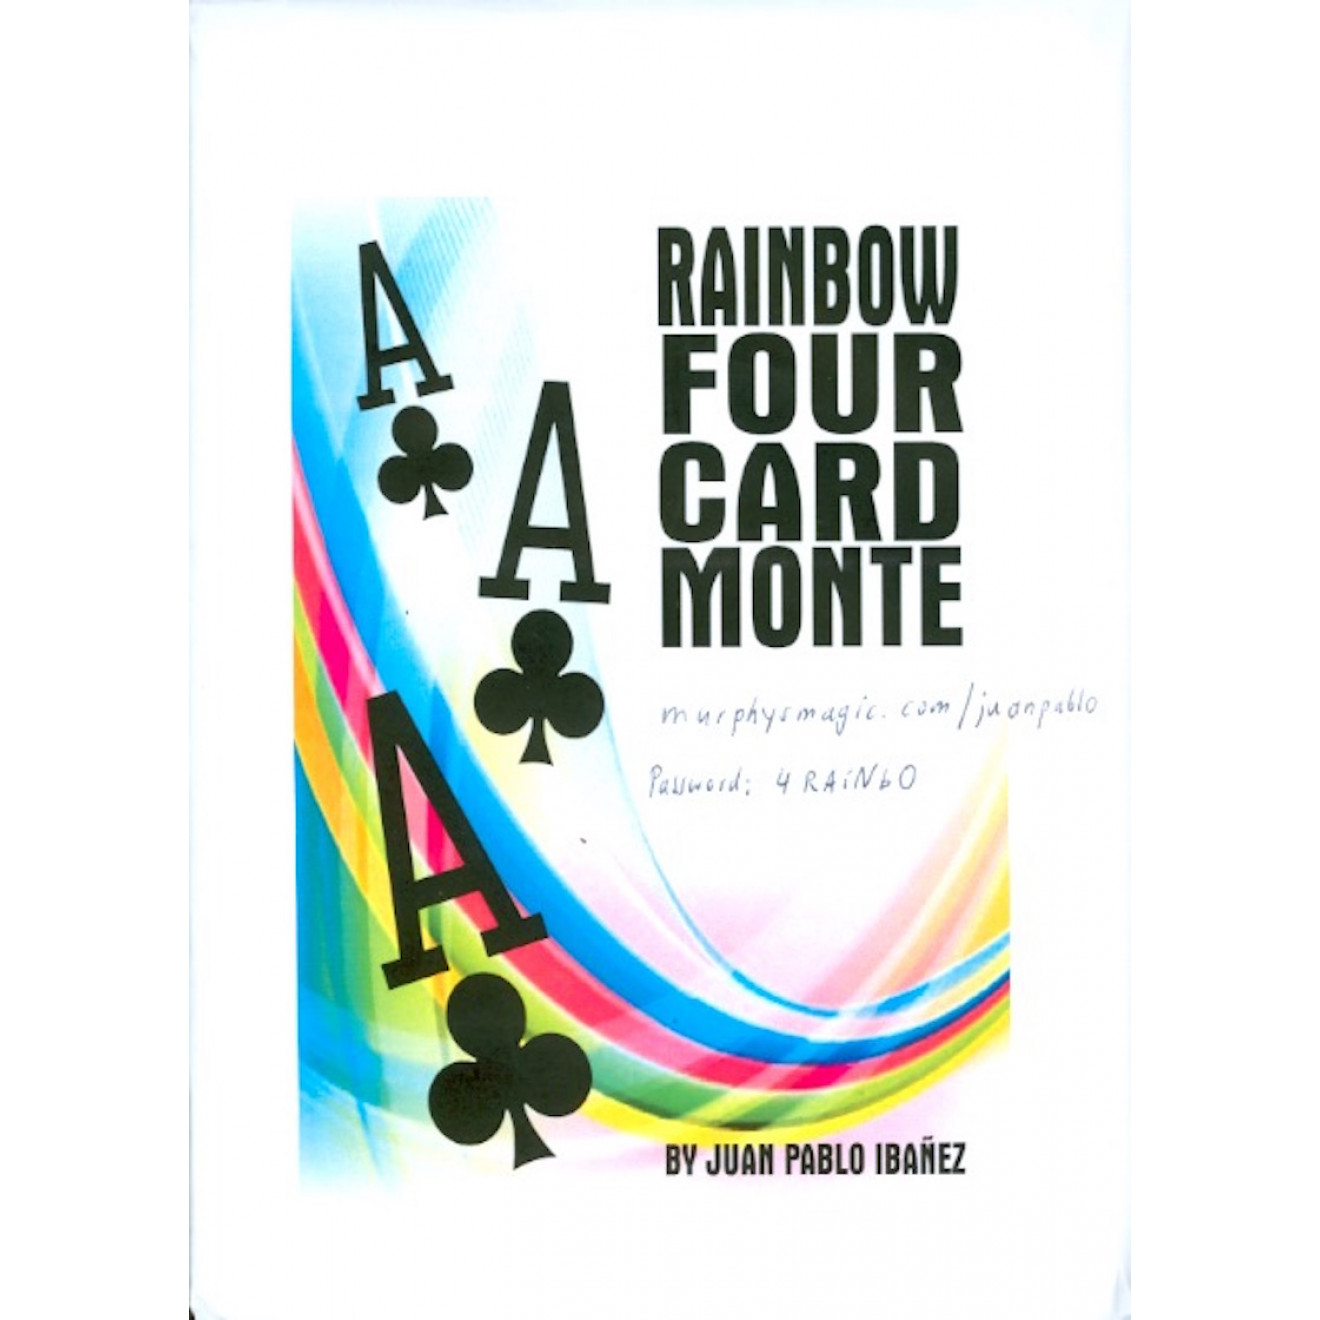 A Rainbow Four Card Monte